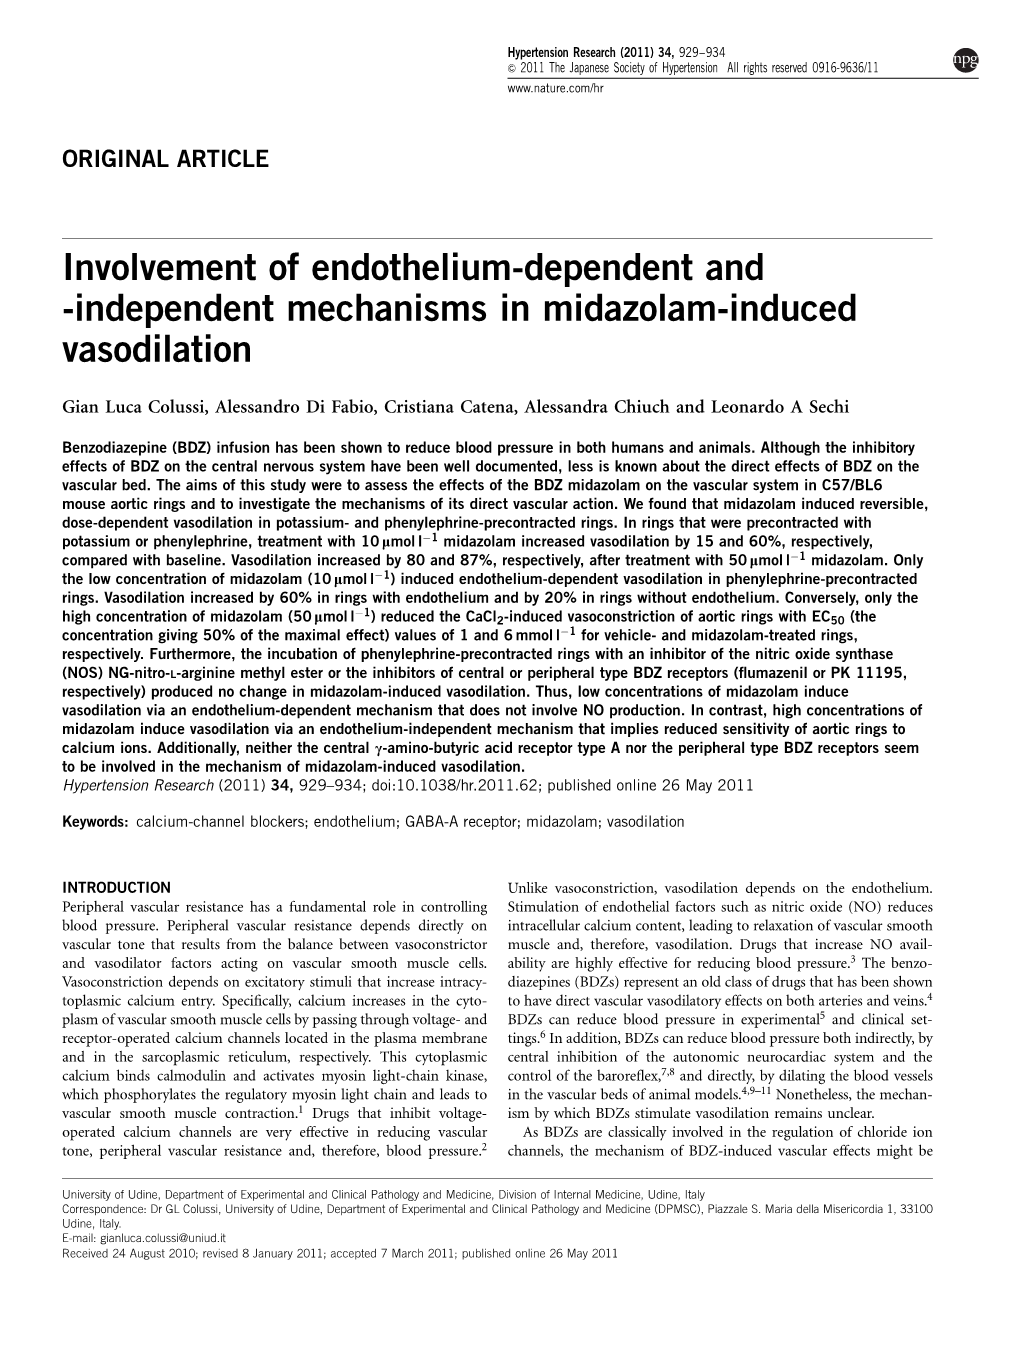 Independent Mechanisms in Midazolam-Induced Vasodilation